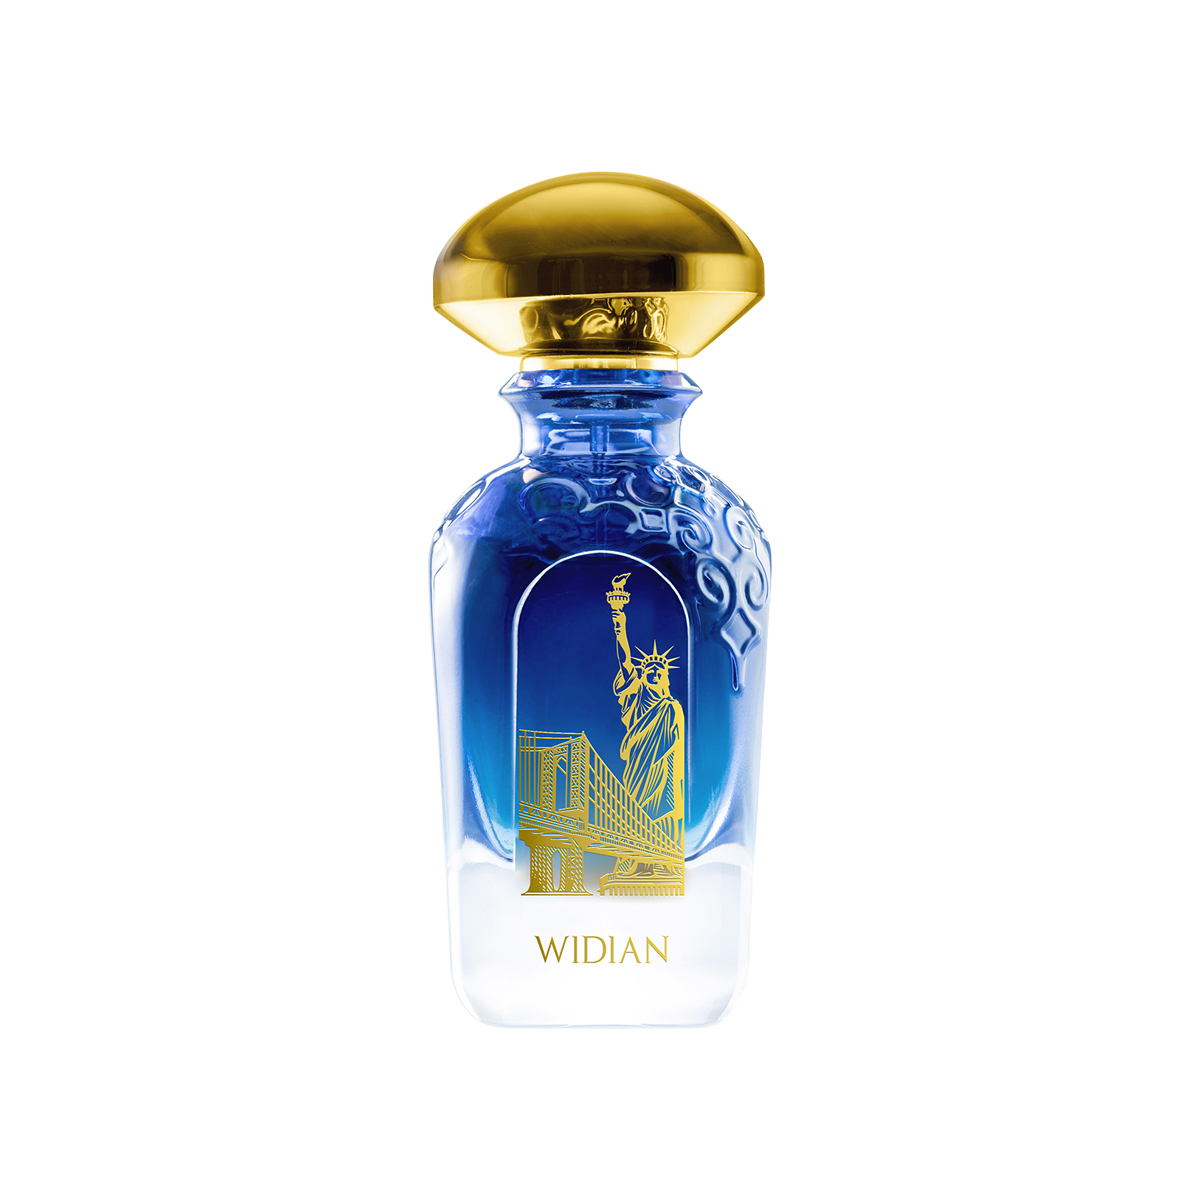 Widian - New York Eau de Parfum